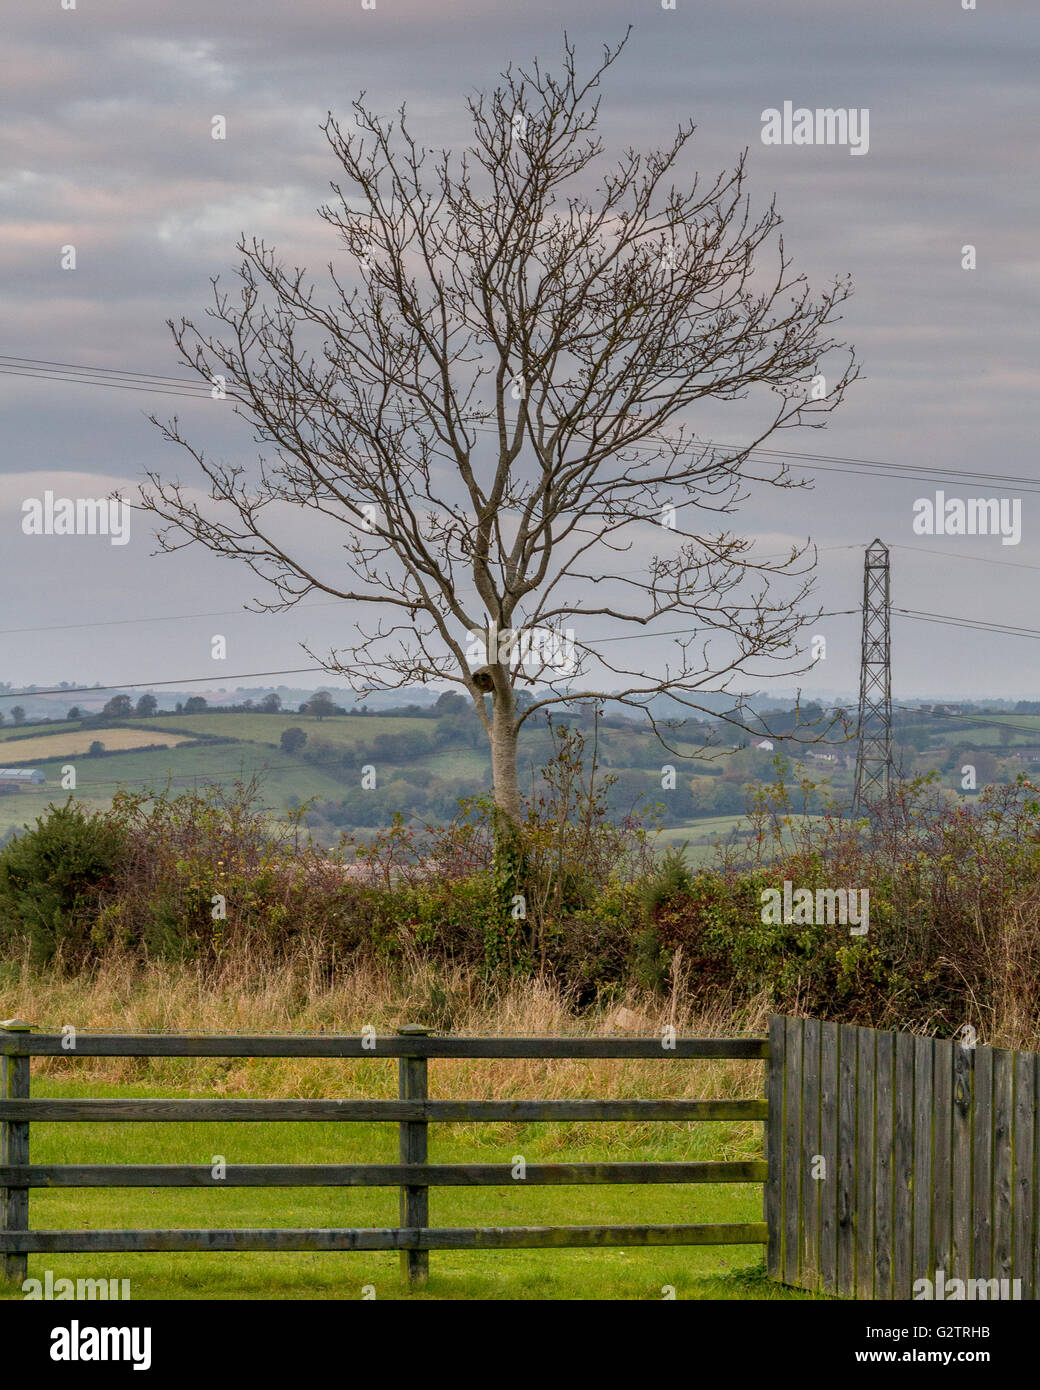 Tree in rural Northern Ireland farmland. Stock Photo